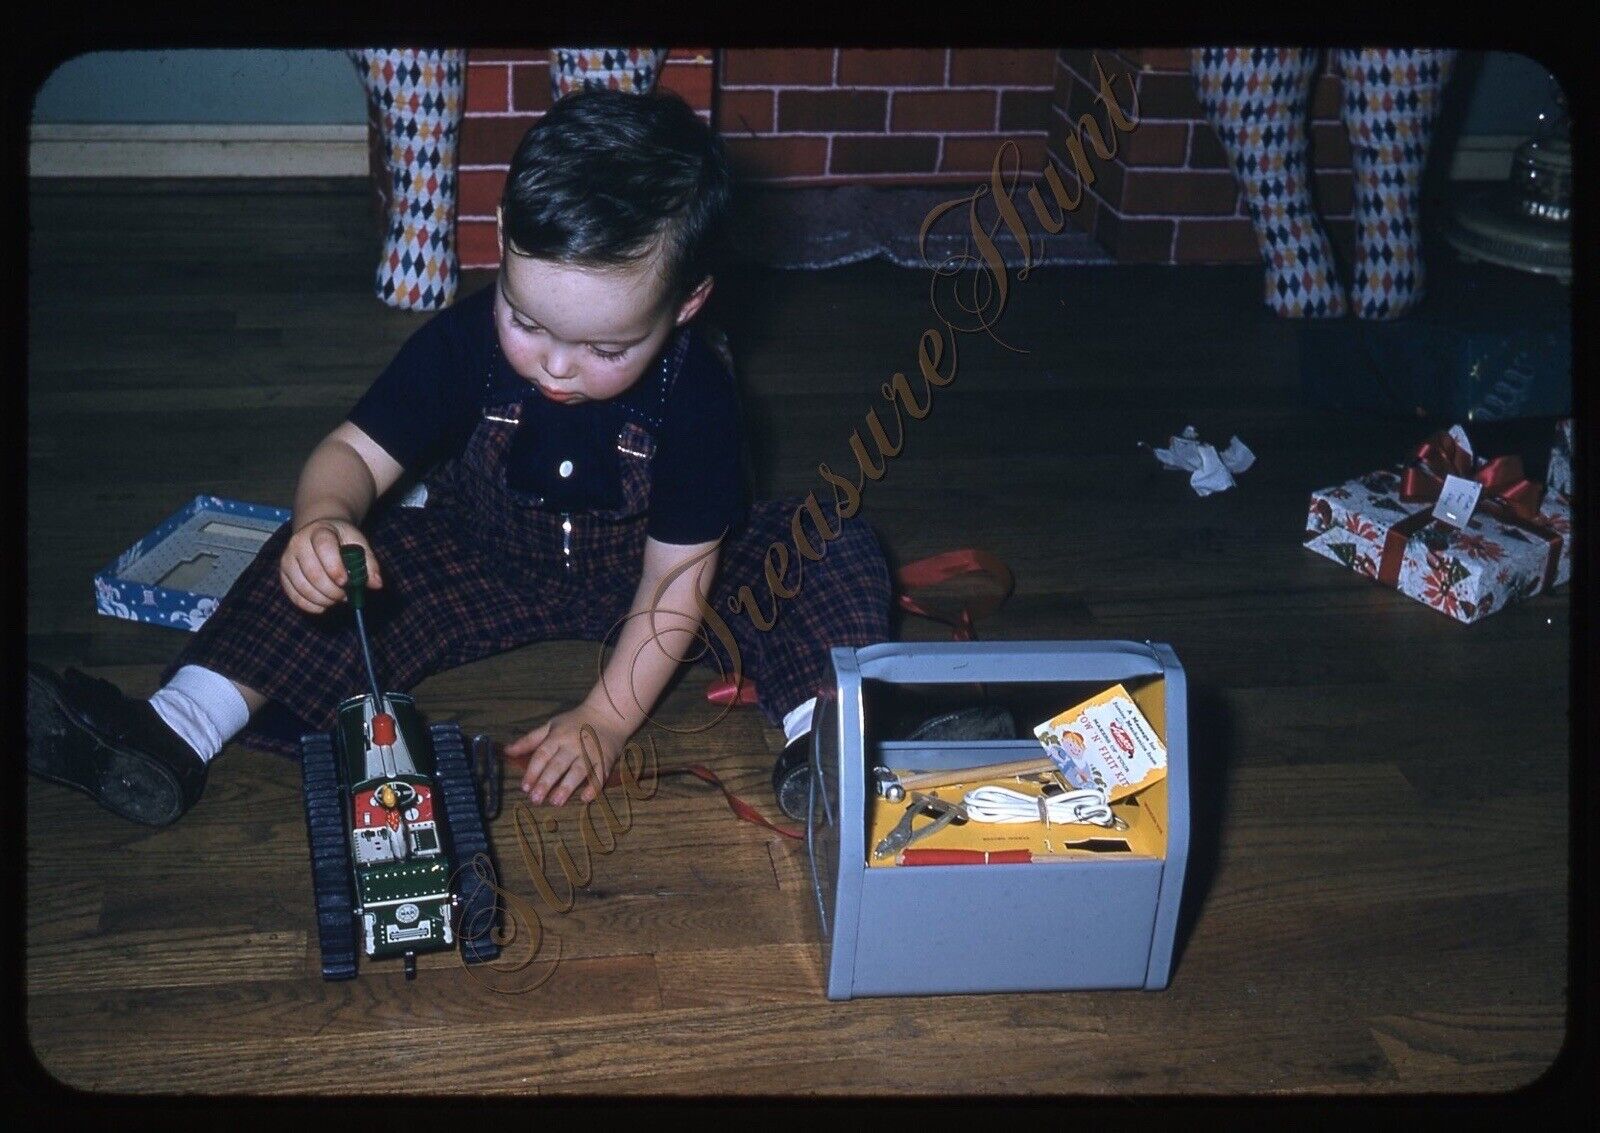 Boy Tow N Fix It Kit Toy Car Americana 1950s 35mm Slide Red Border Kodachrome